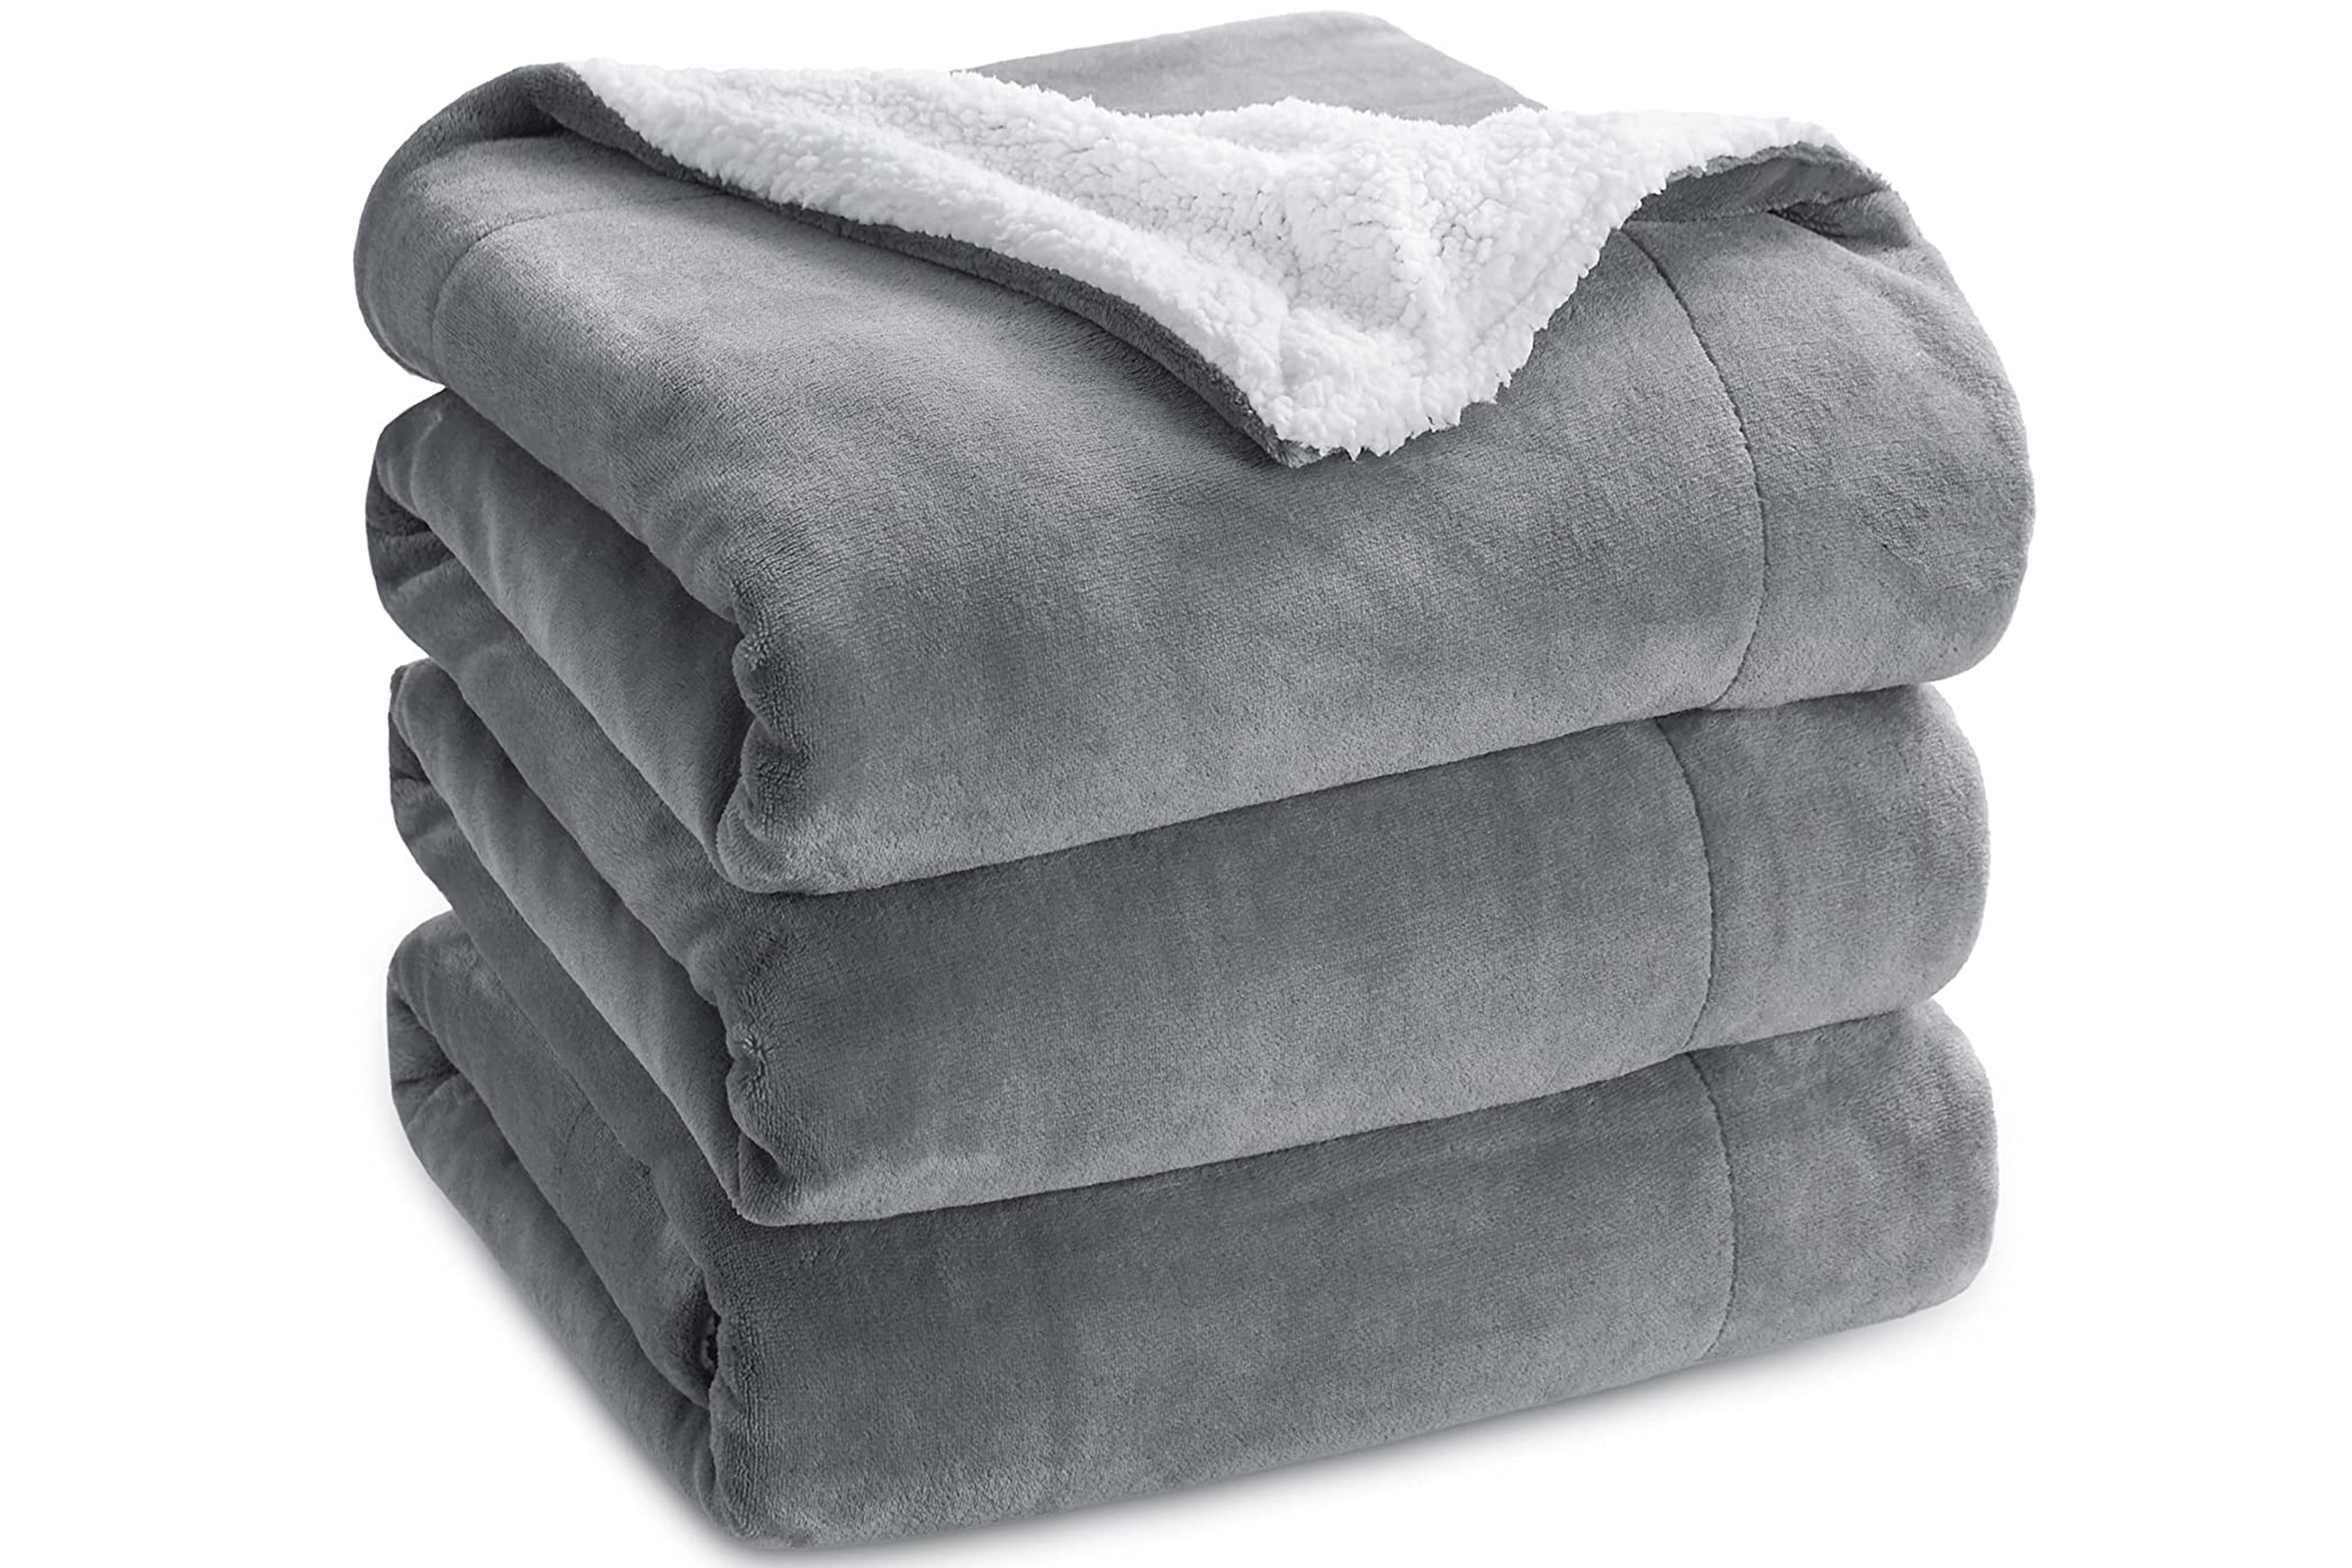 Bedsure Sherpa Fleece Warm and Fuzzy Bed Blanket